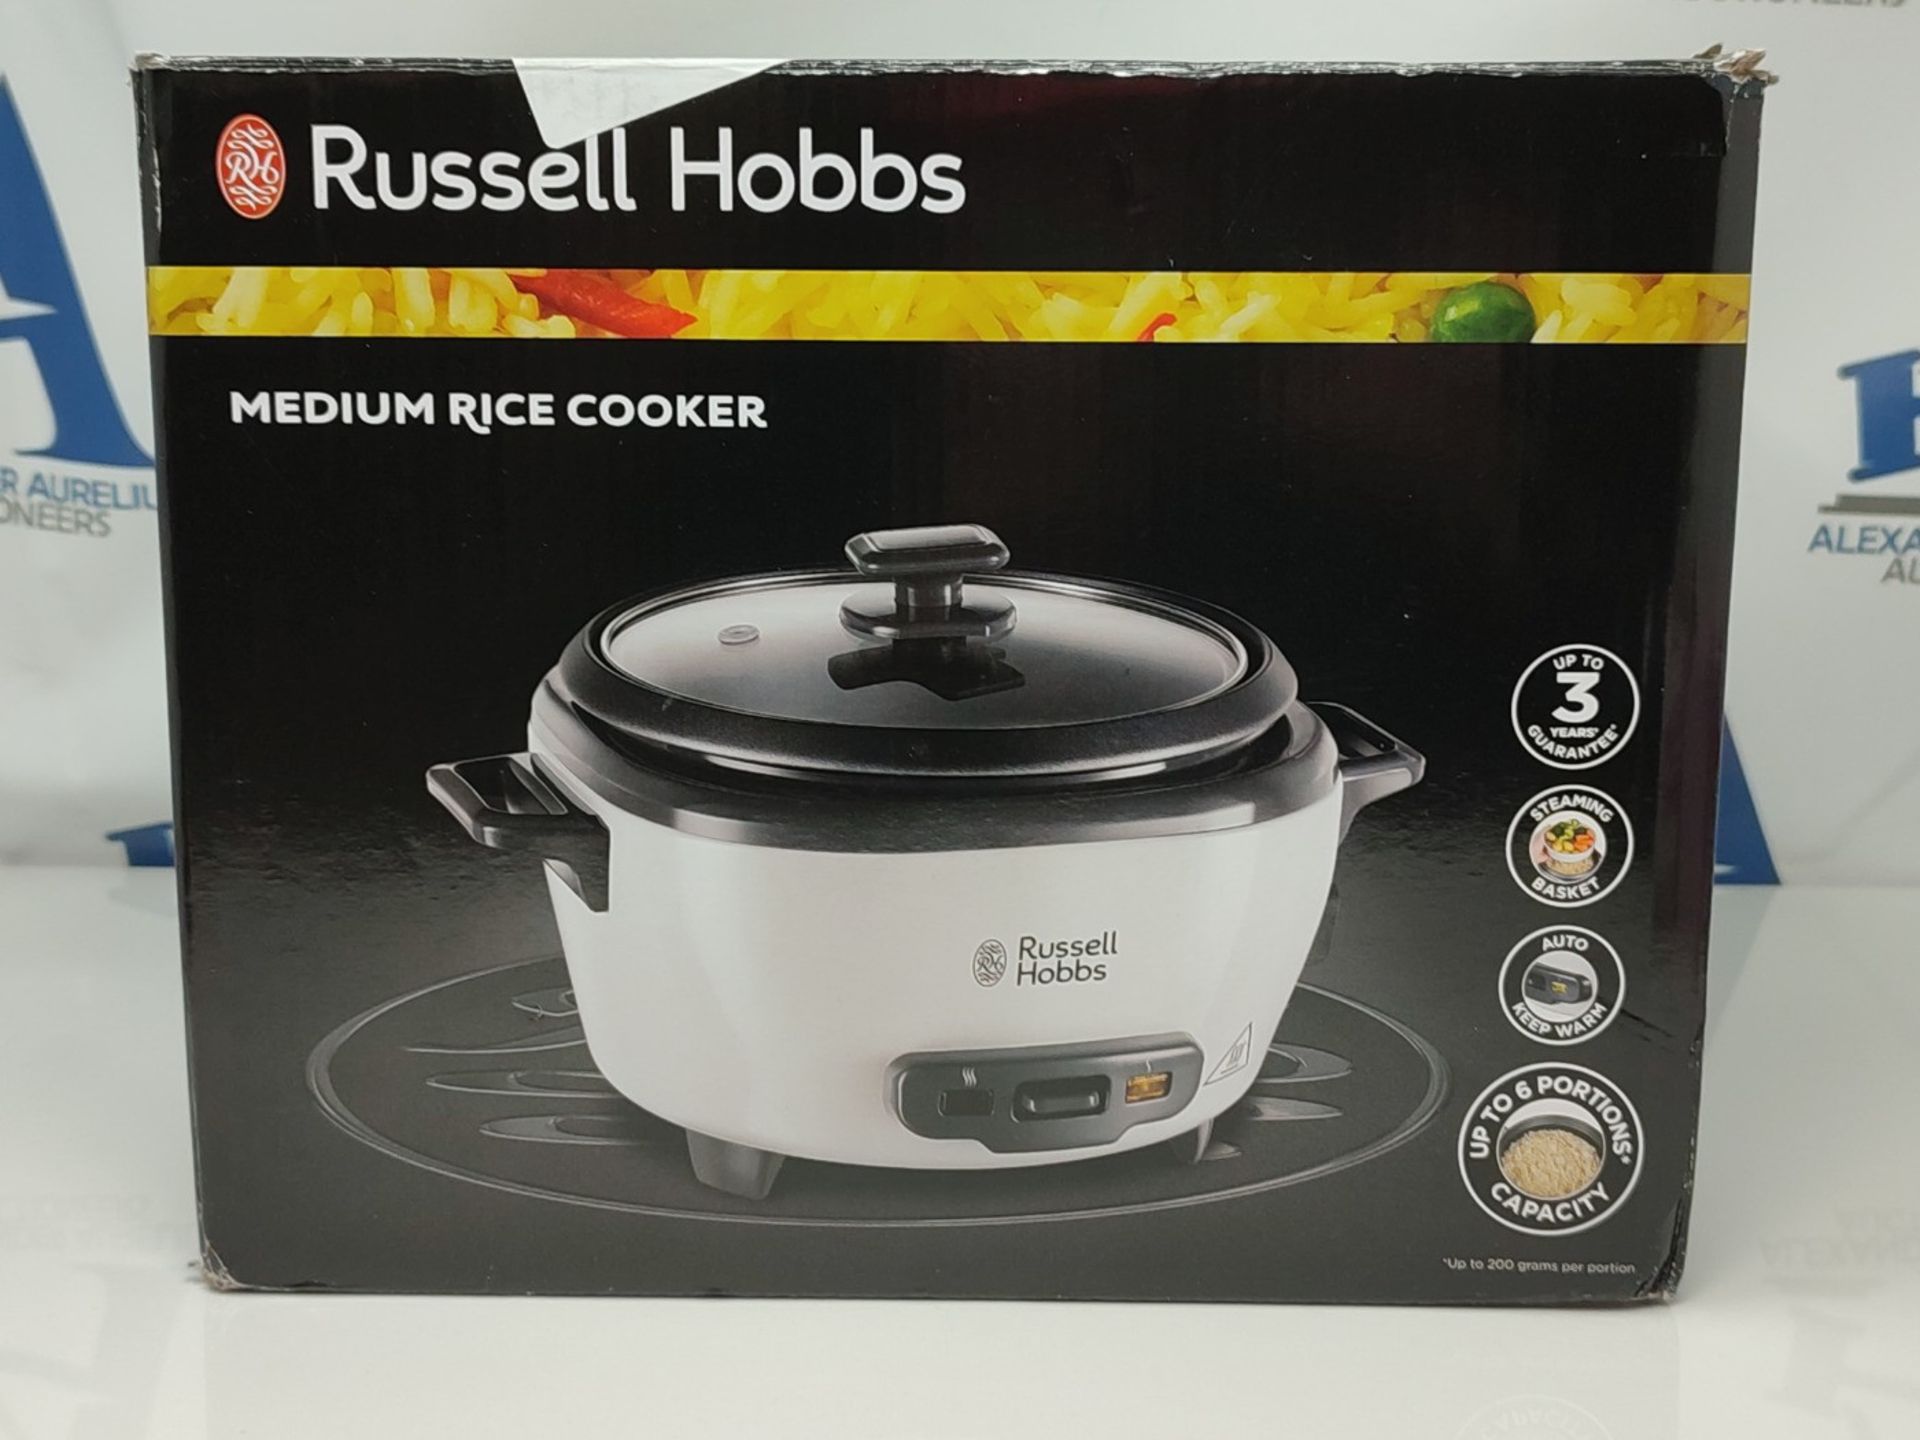 Russell Hobbs 27030 Medium Rice Cooker, Metal, 300 W, 1.2 kilograms, White - Image 2 of 3